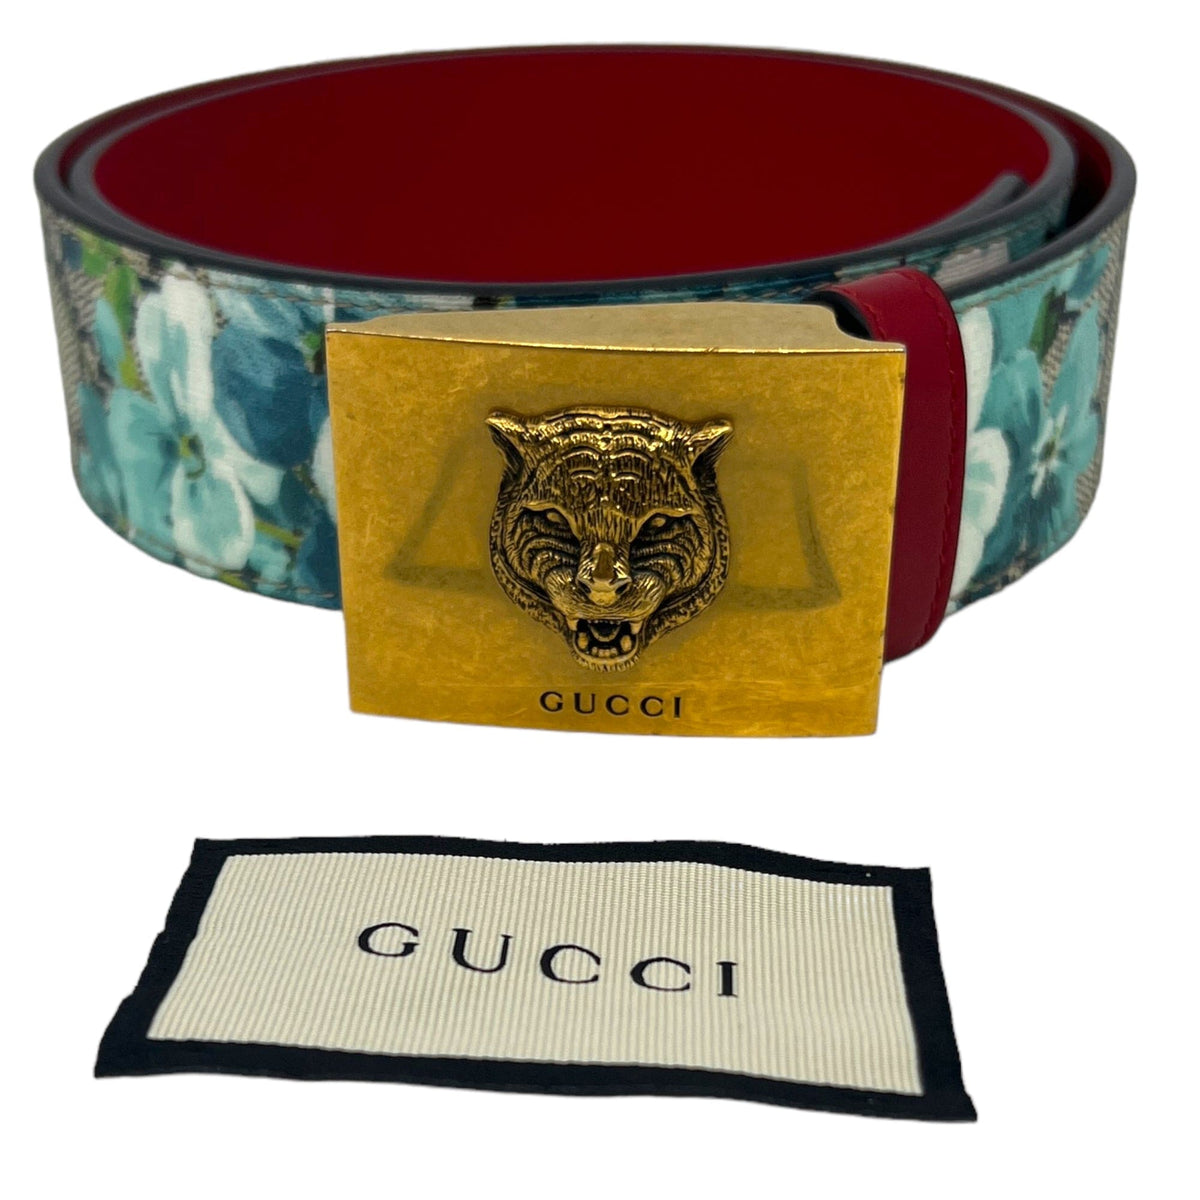 Gucci GG Supreme Blooms Belt w/ Tags - Size 36